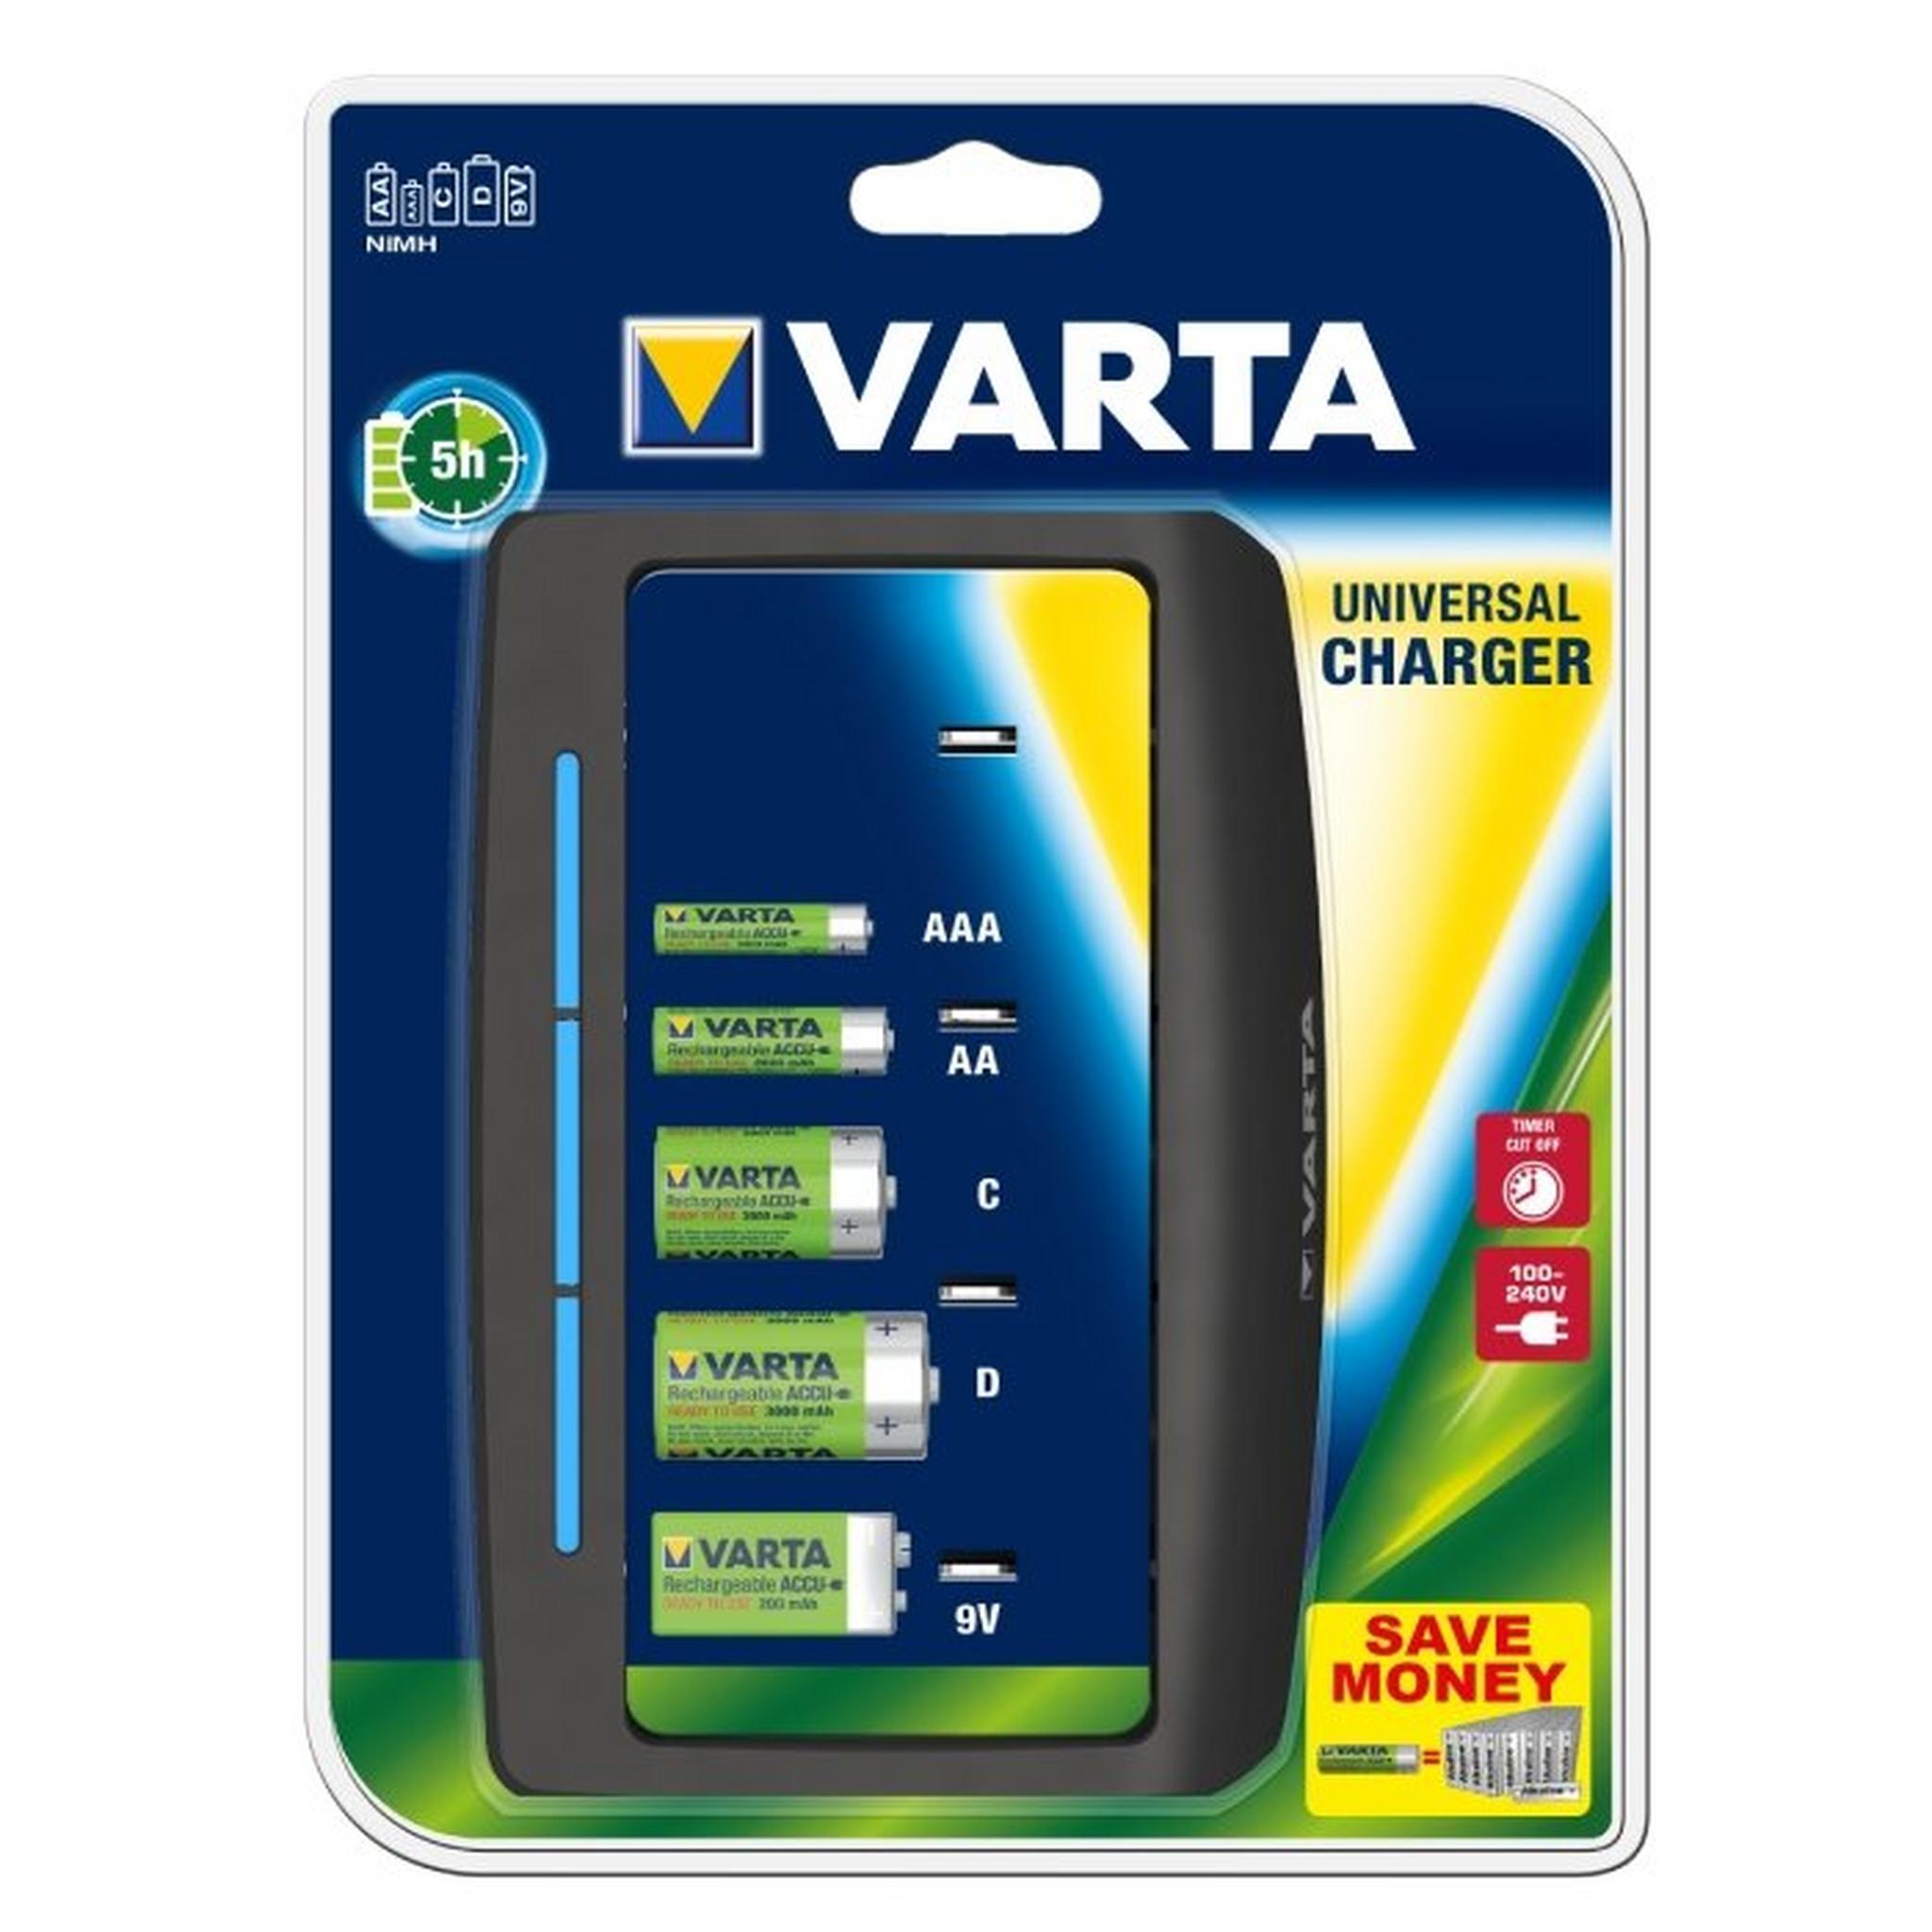 Varta Universal Battery Charger